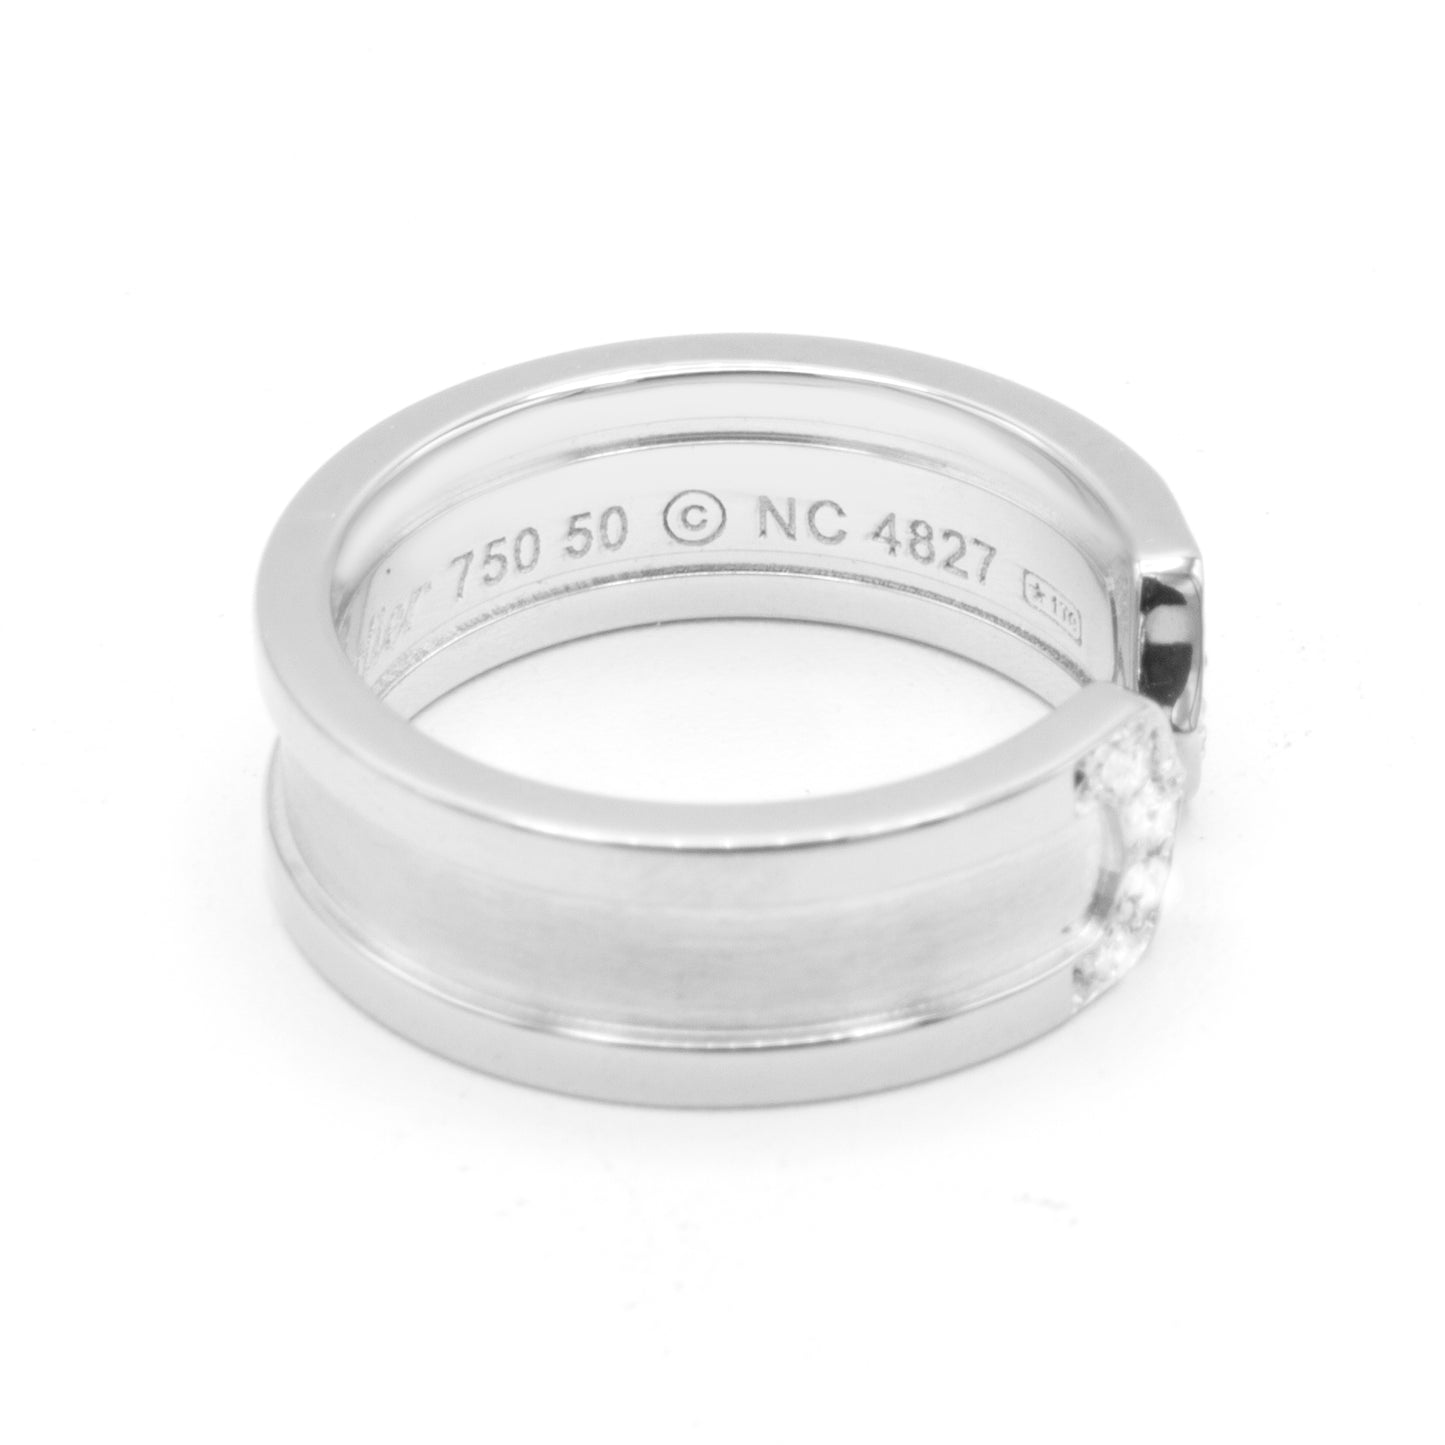 Cartier "C de Cartier" ring Size 50